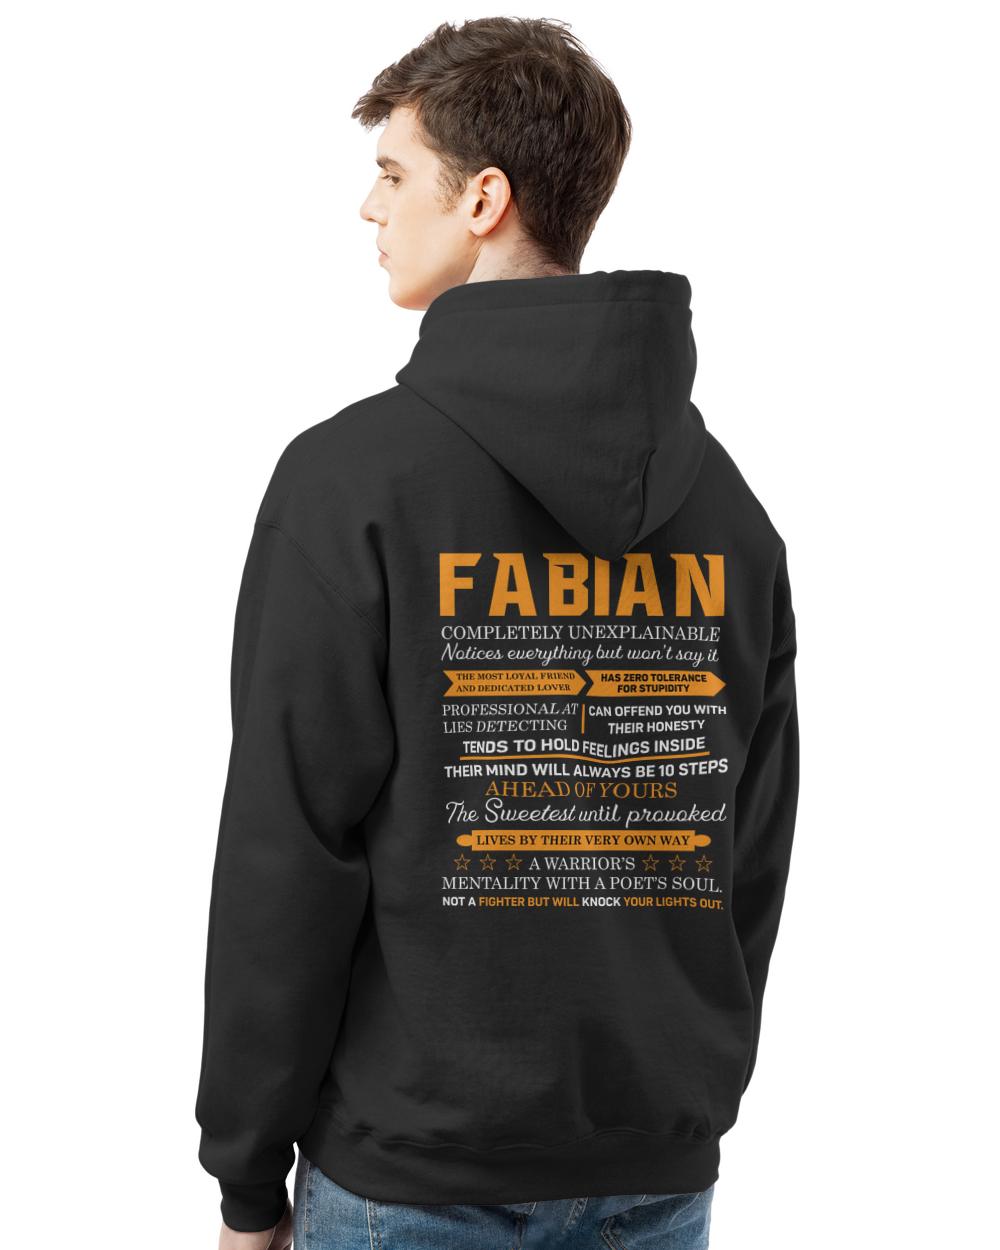 FABIAN-13K-N1-01